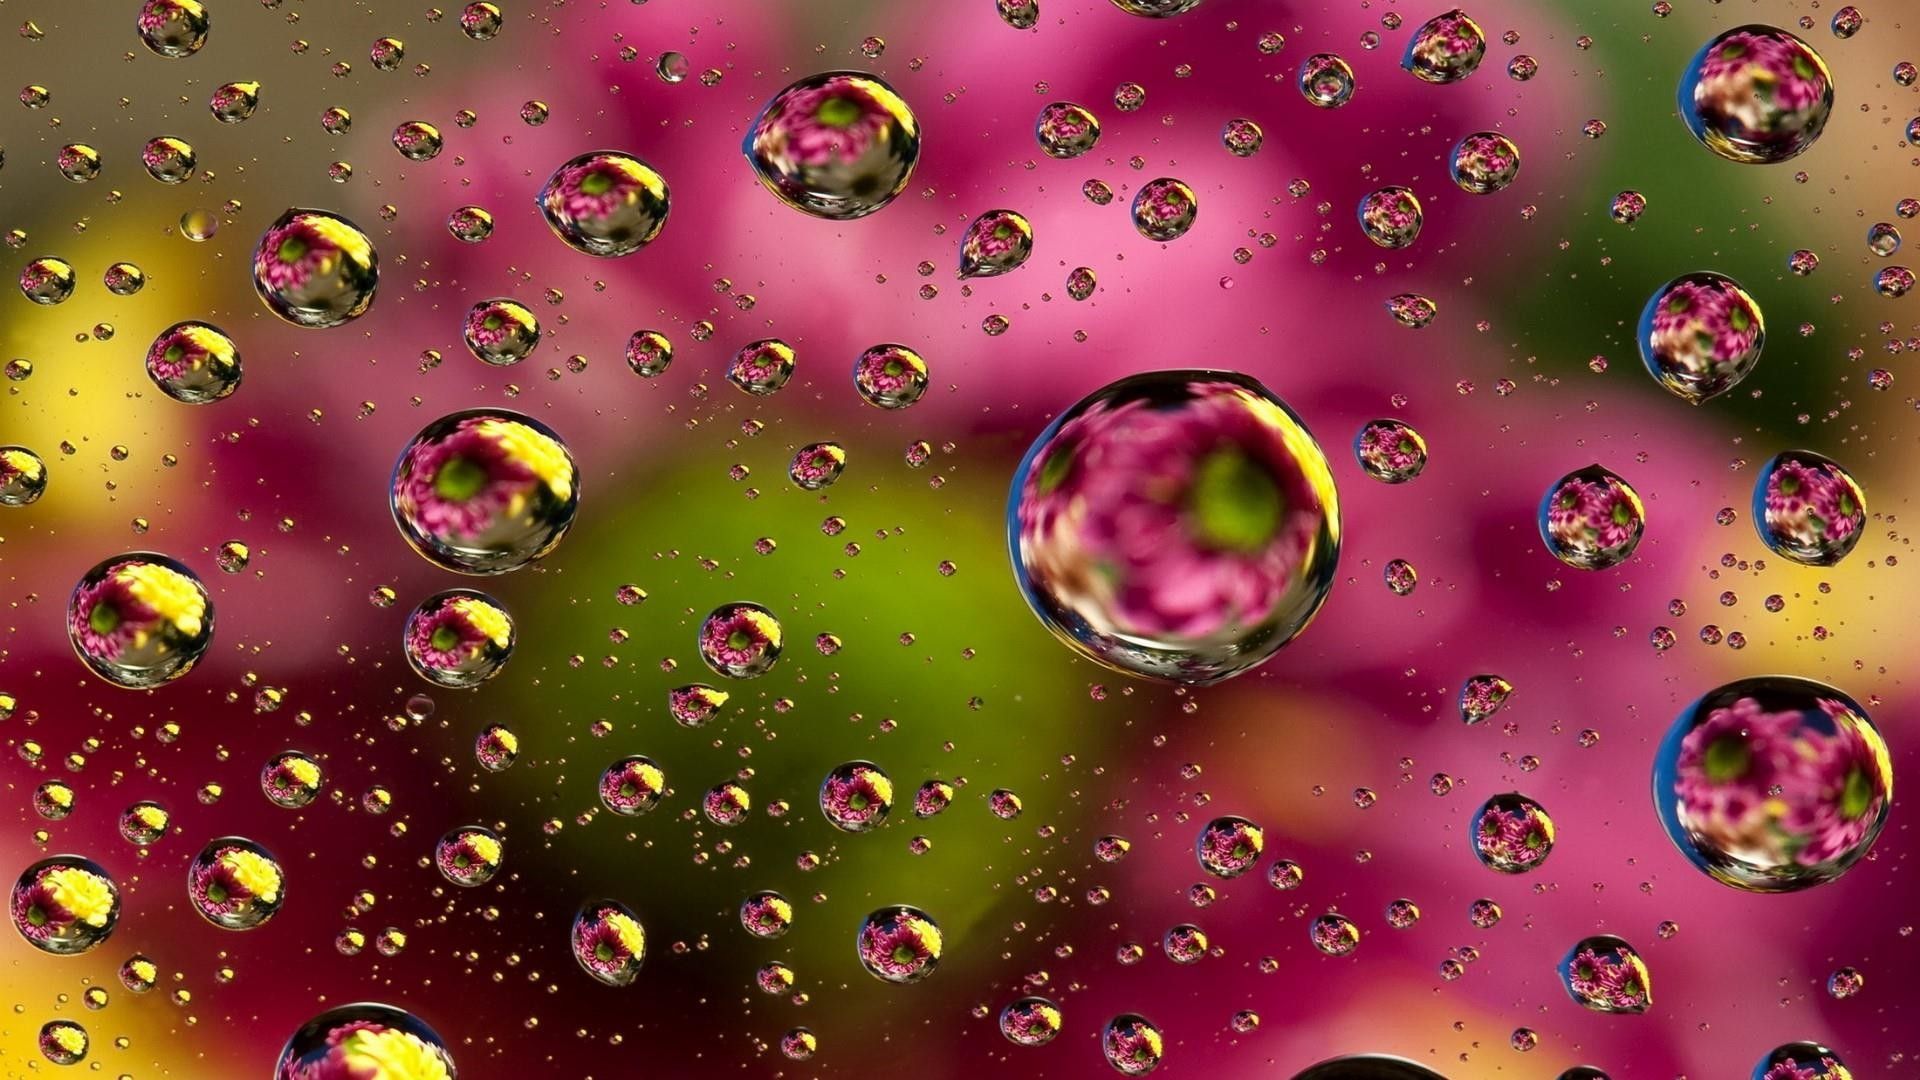 Colorful Water Drops Wallpaper HD .teahub.io